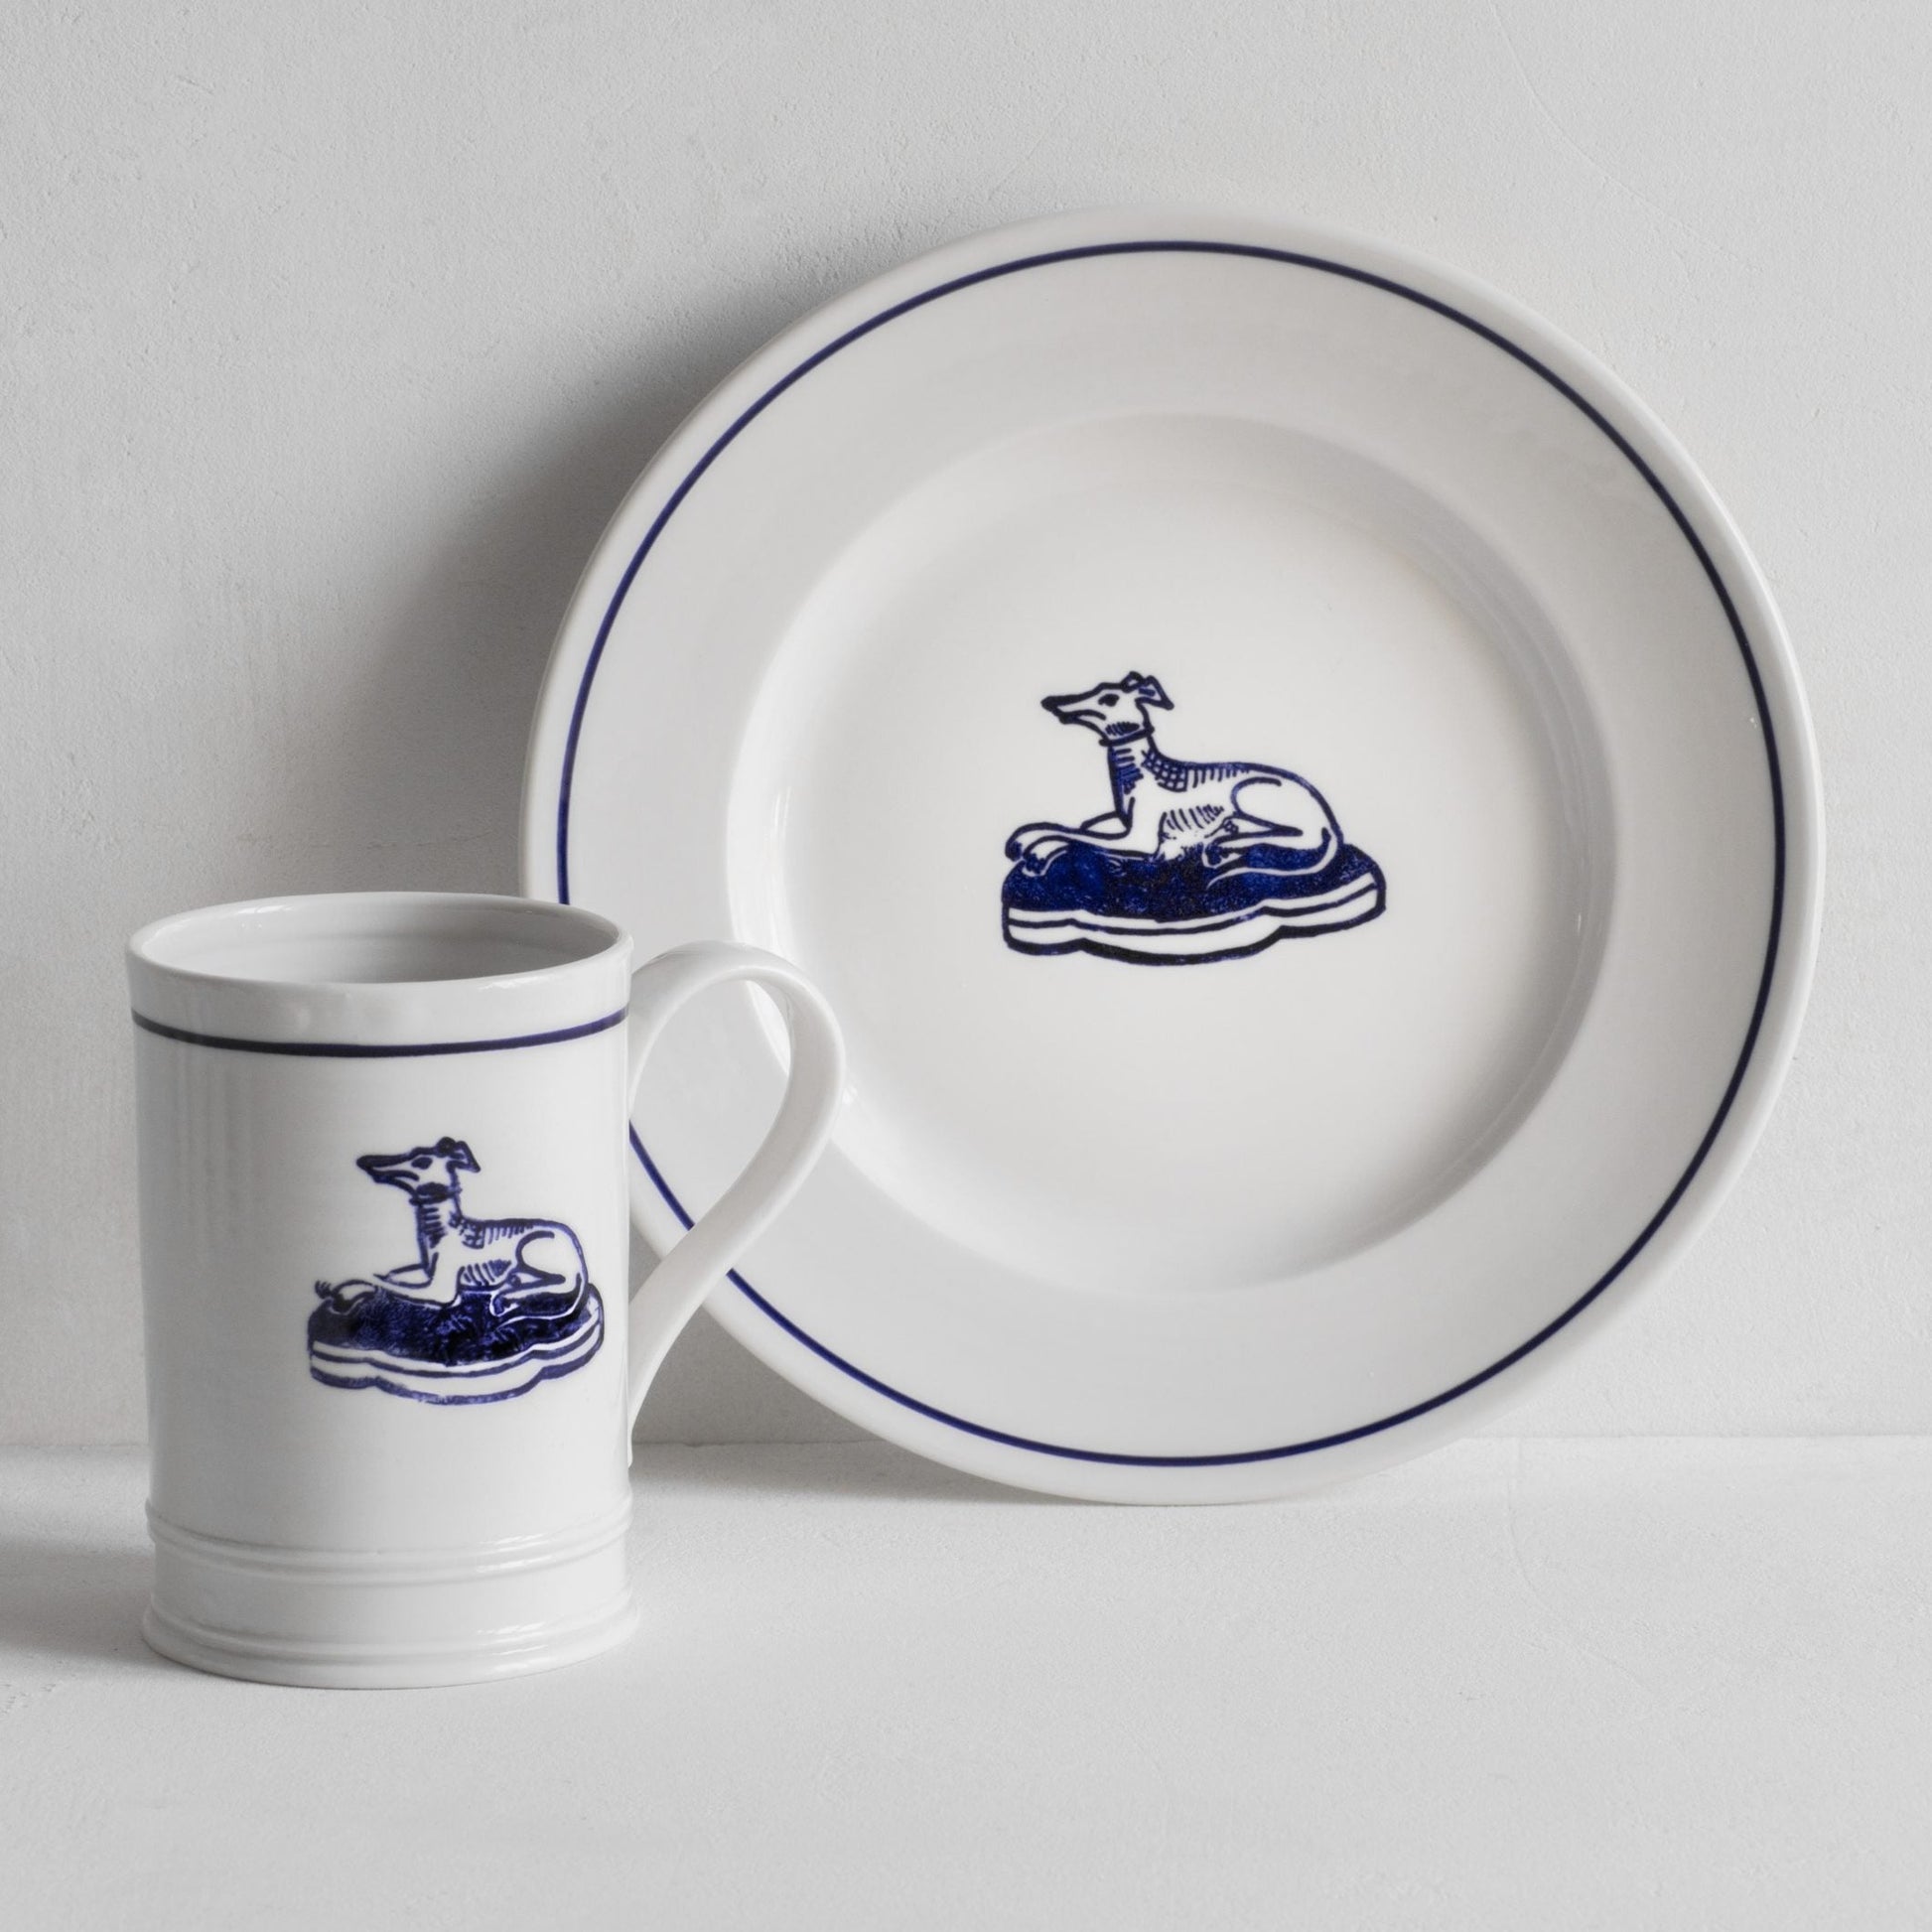 Classical Hound Side Plate and Mug Gift Set | Luxury Pottery | Handmade